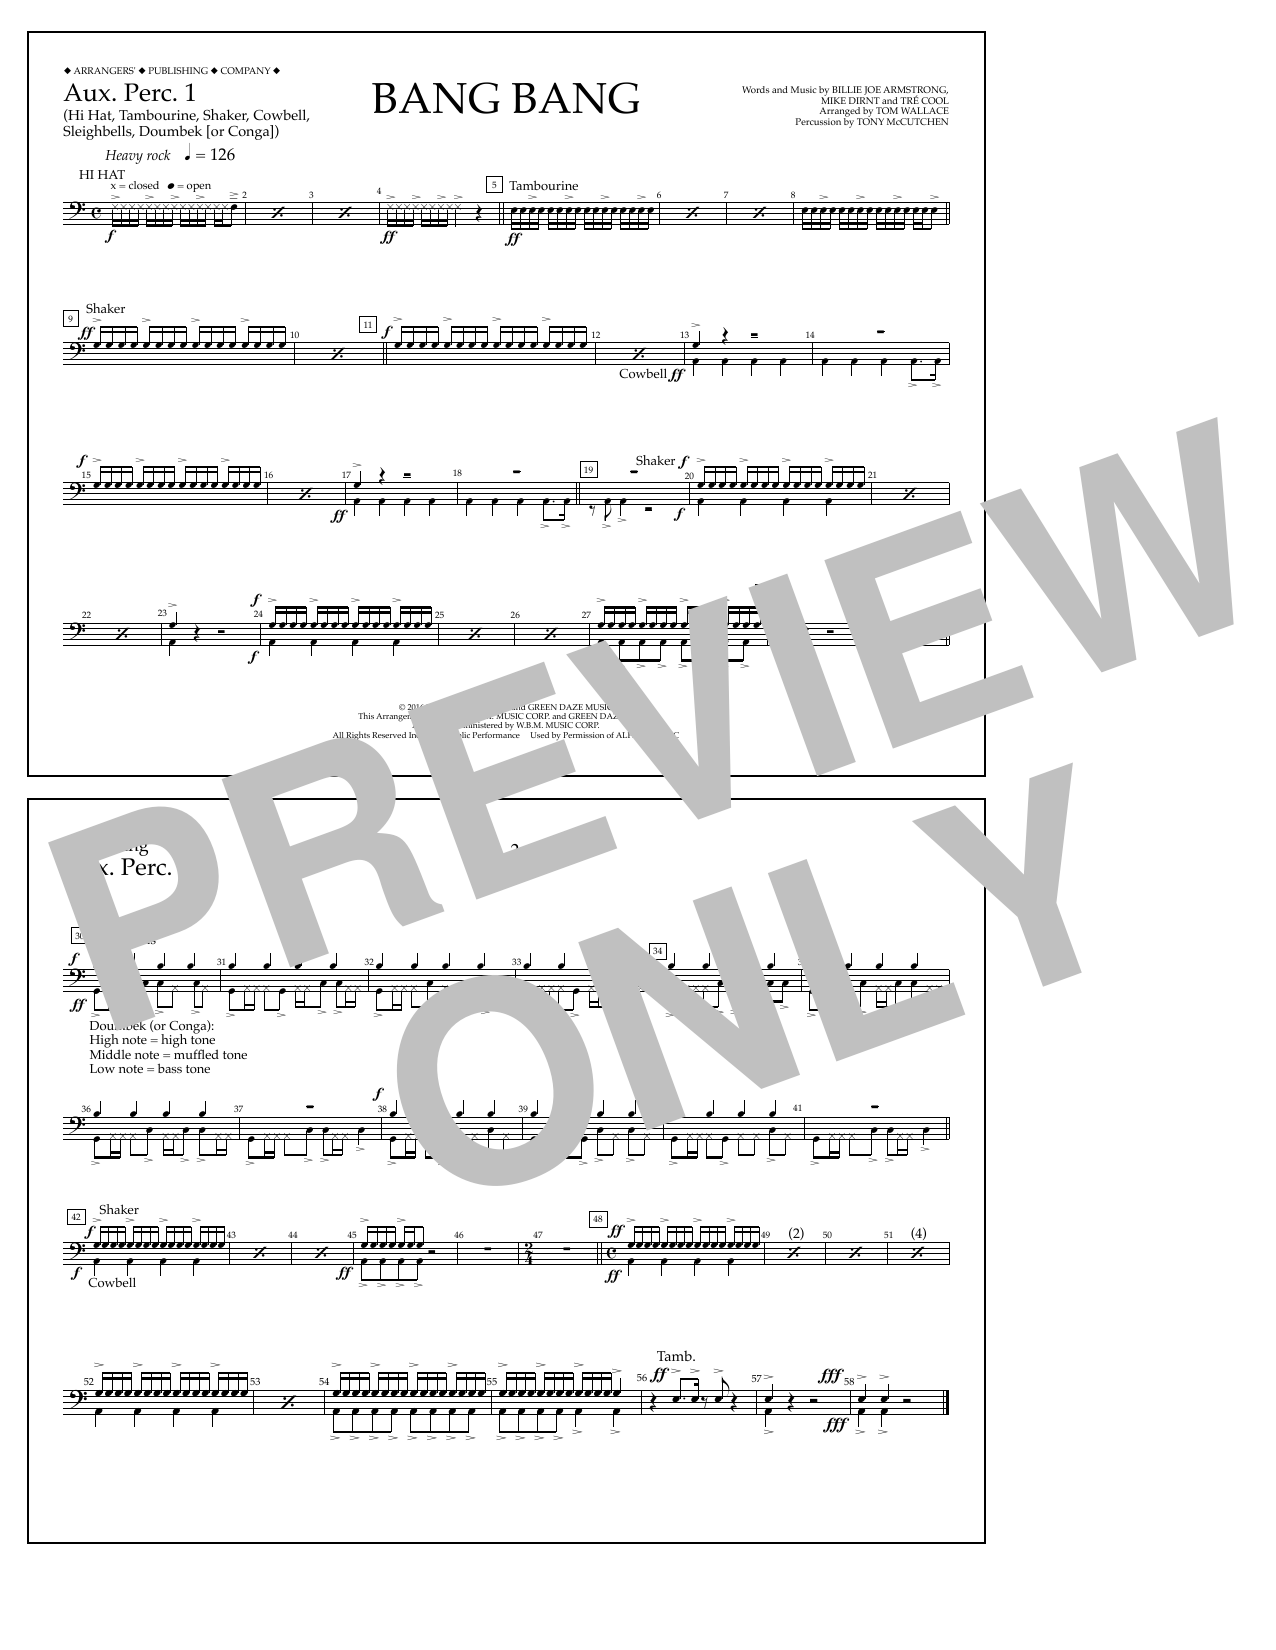 Tom Wallace Bang Bang - Aux. Perc. 1 Sheet Music Notes & Chords for Marching Band - Download or Print PDF